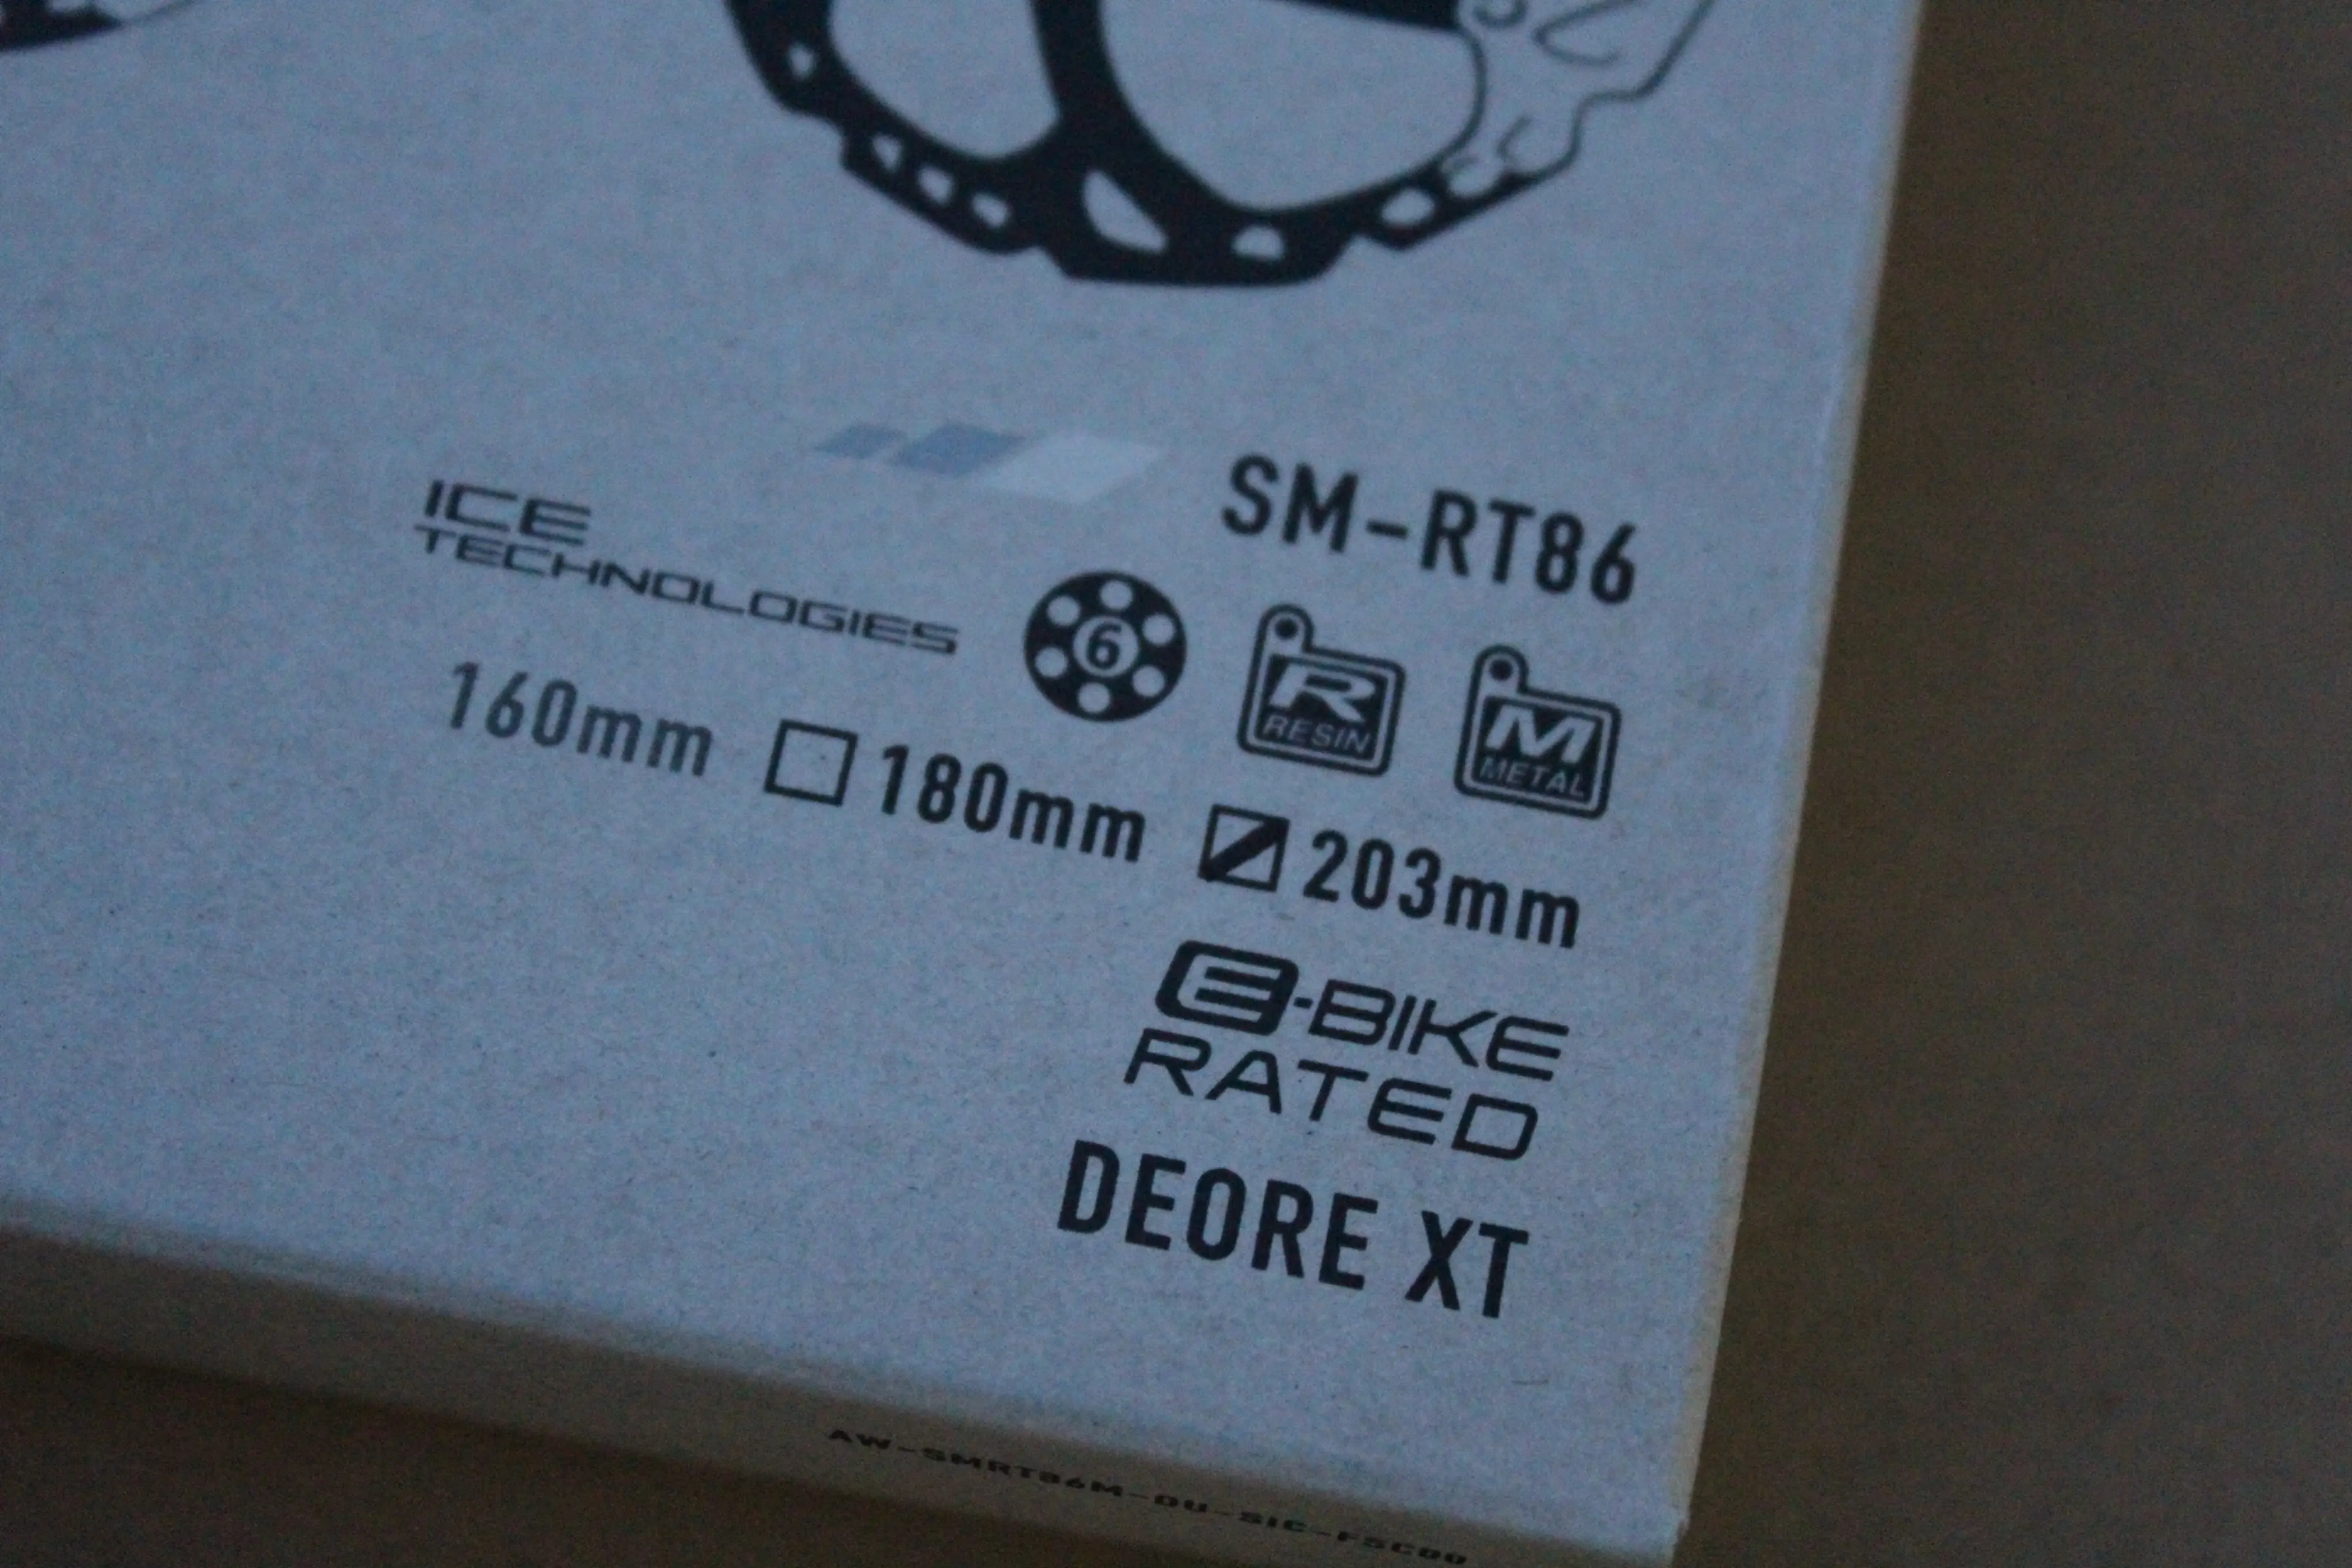 Image Shimano SM-RT86 XT Ice Technology - 203mm disc rotor